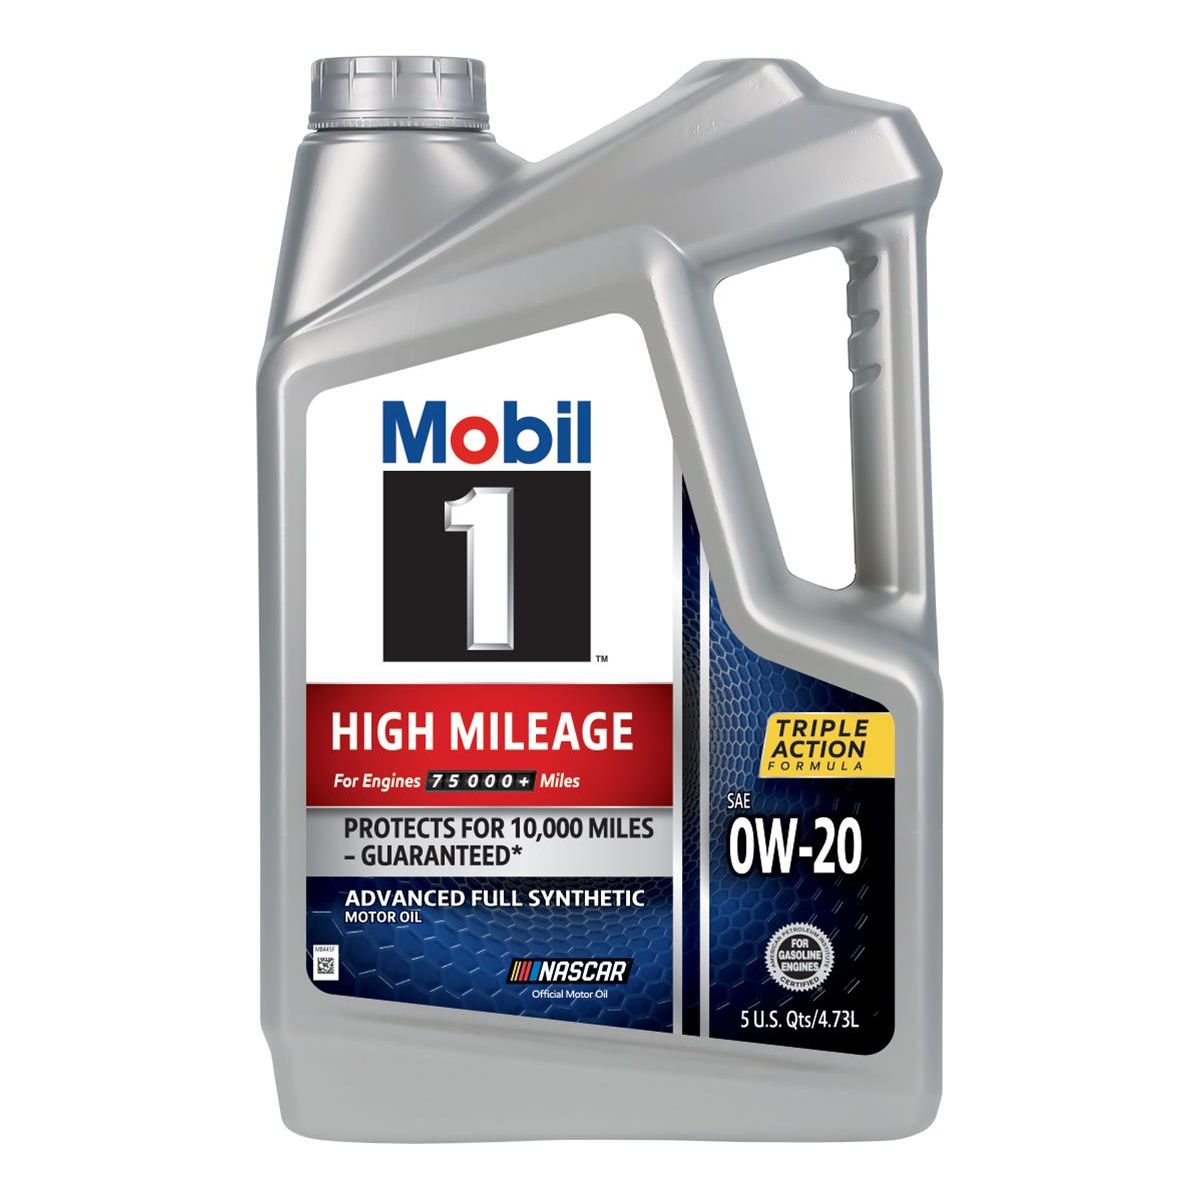 Mobil 1 High Mileage Motor Oil 122536